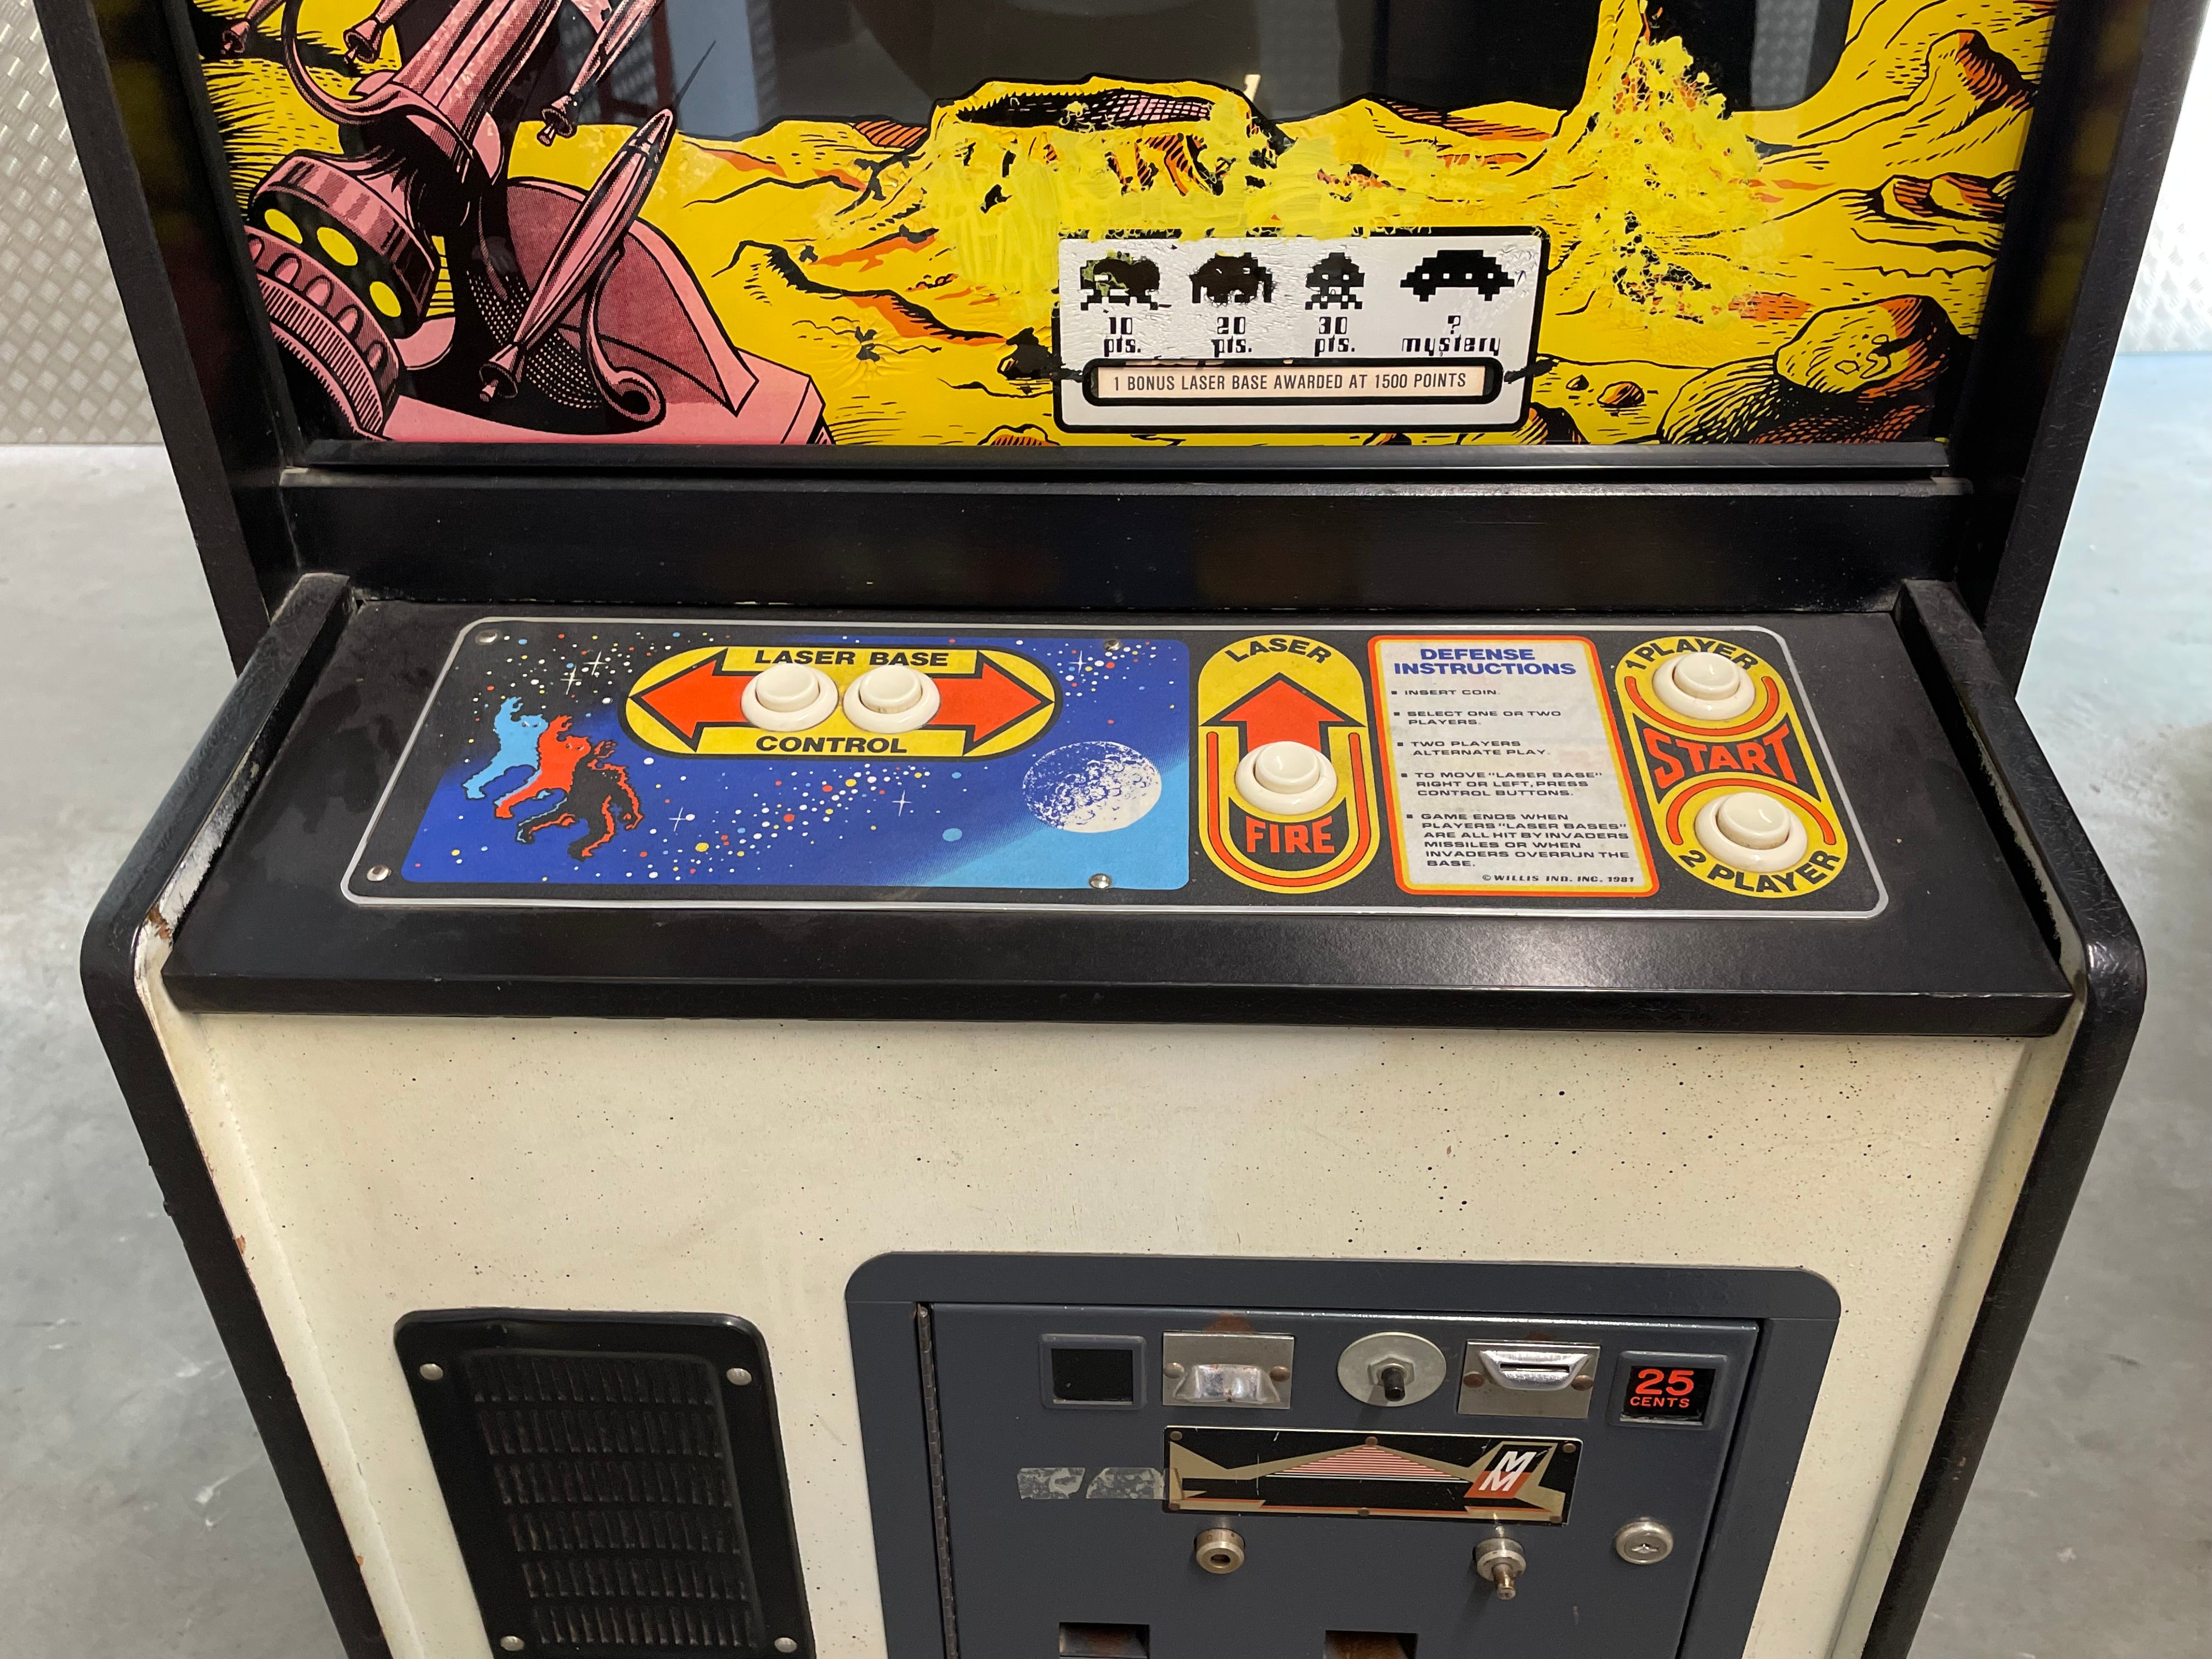 Space War, Arcade Video game by Sanritsu (1979)